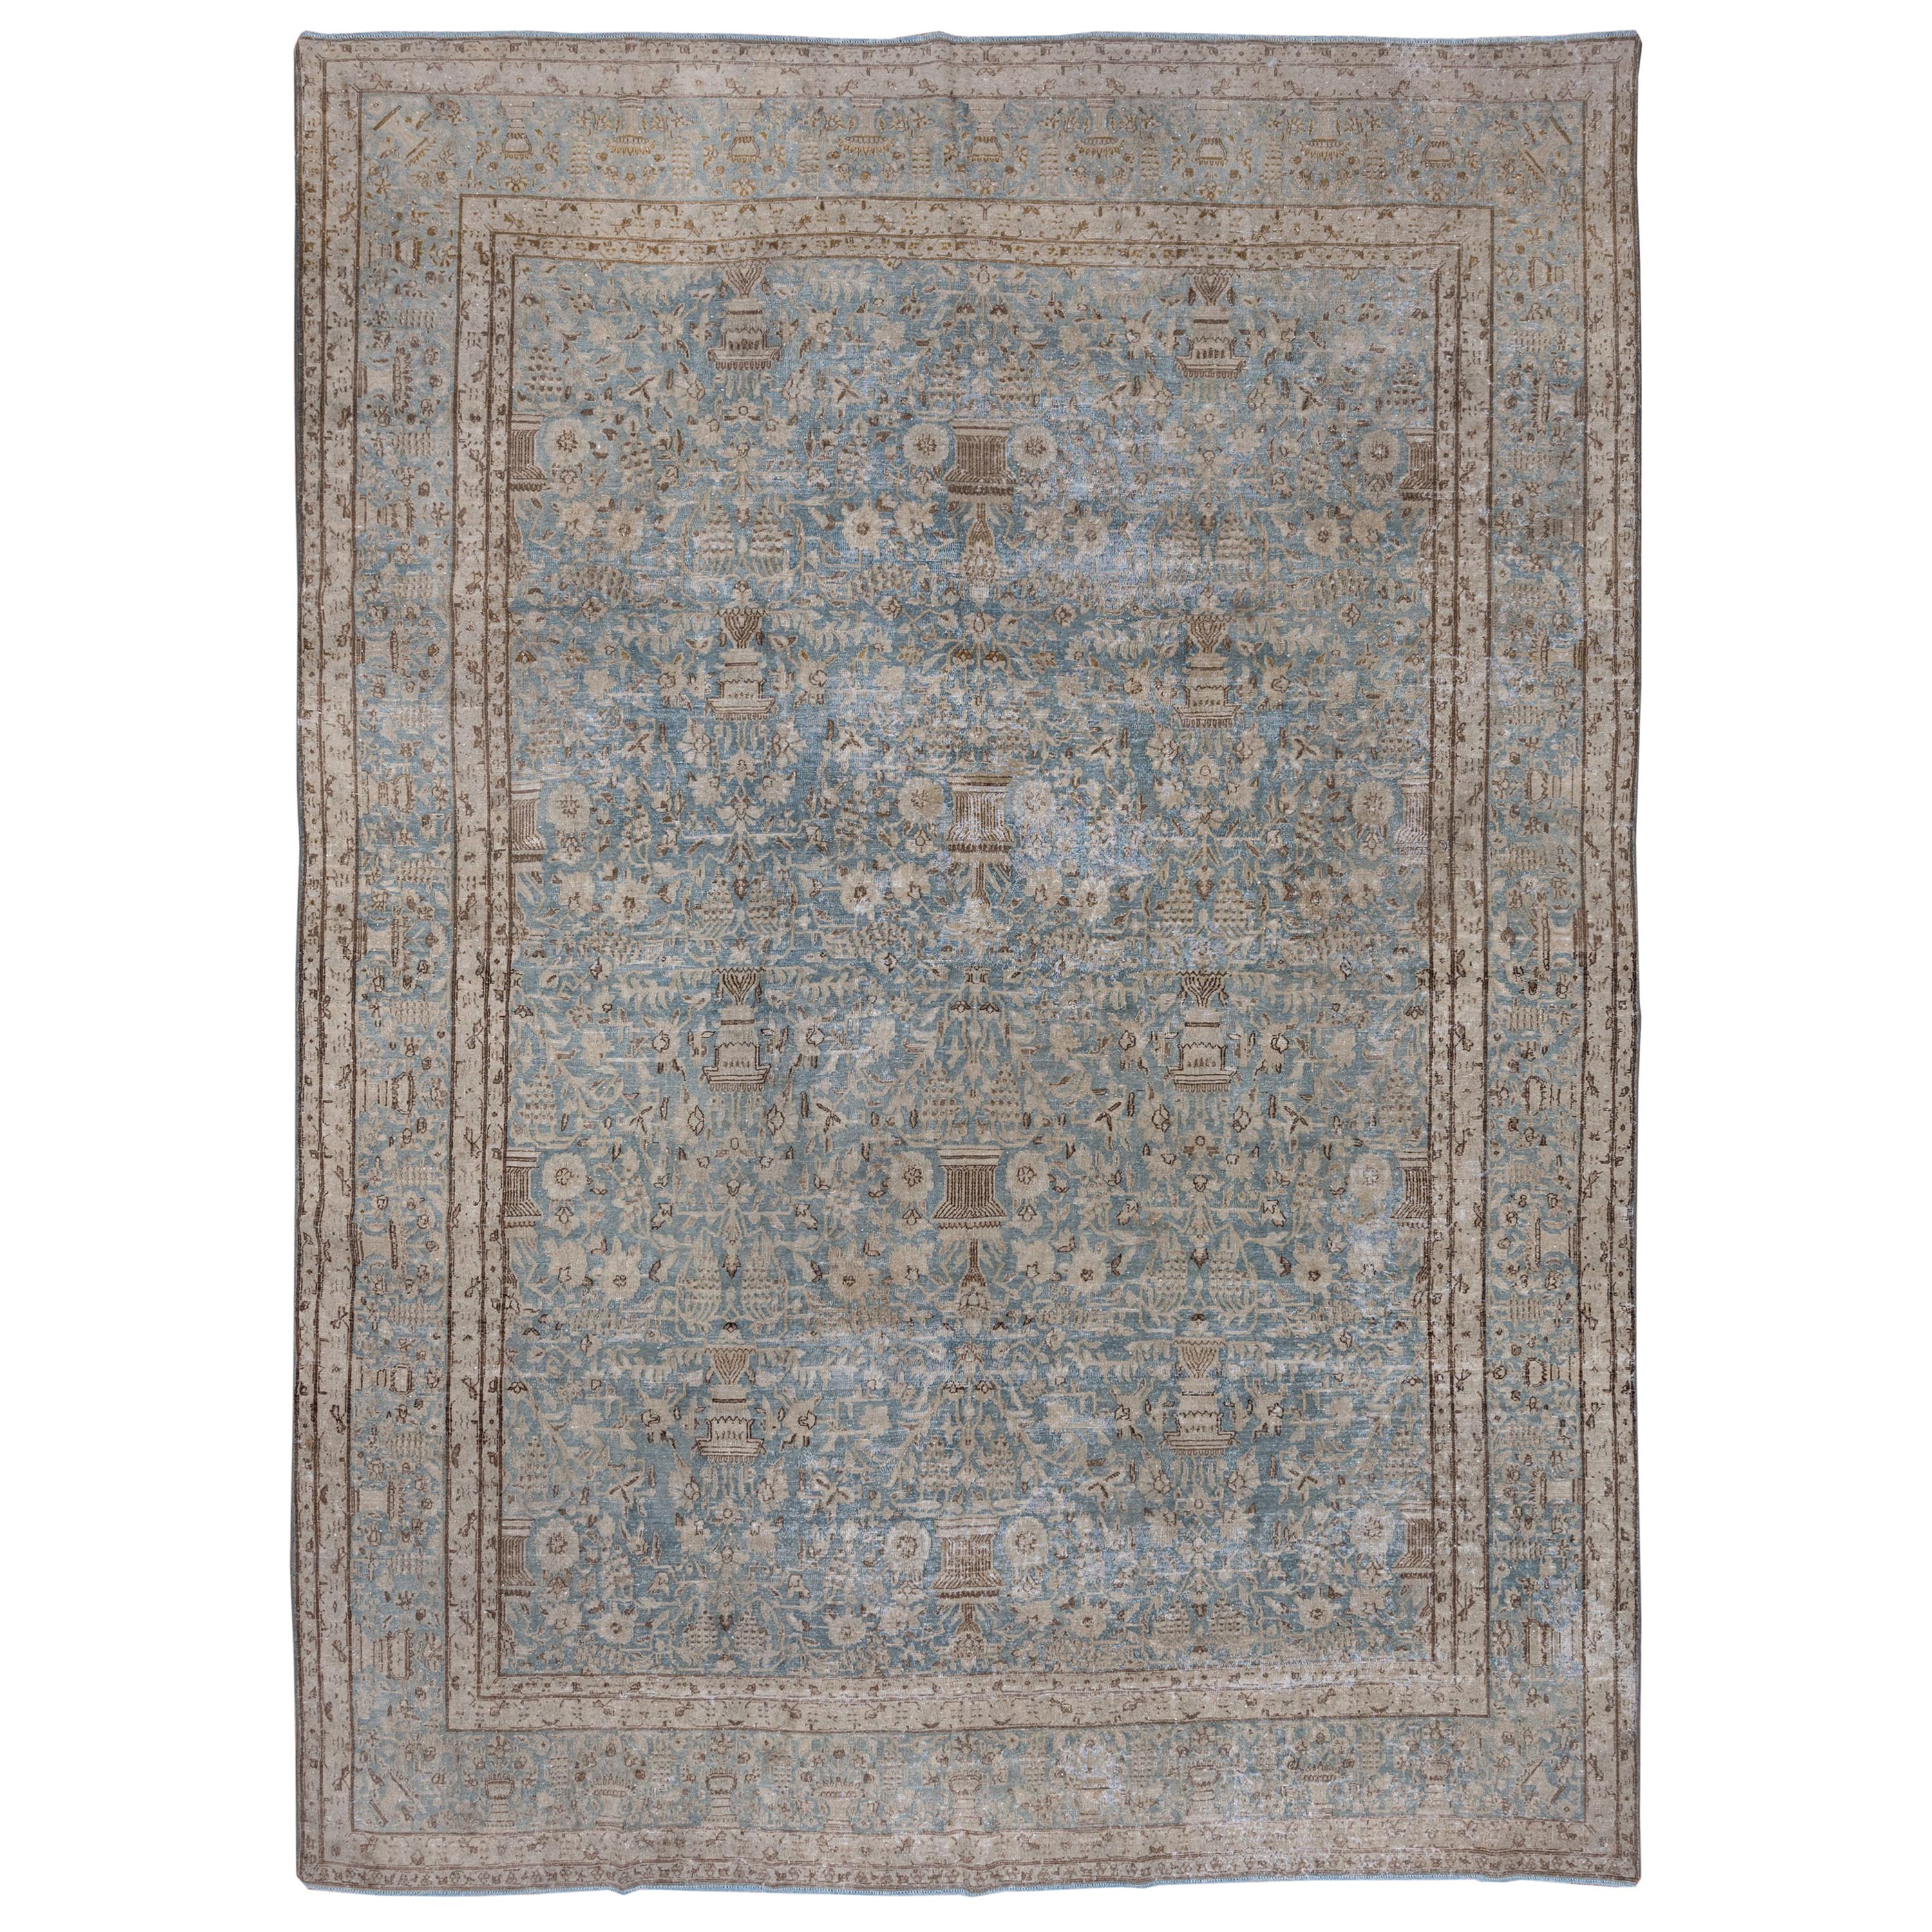 Light Blue Antique Persian Kerman Carpet with Vase Design, Allover Field For Sale